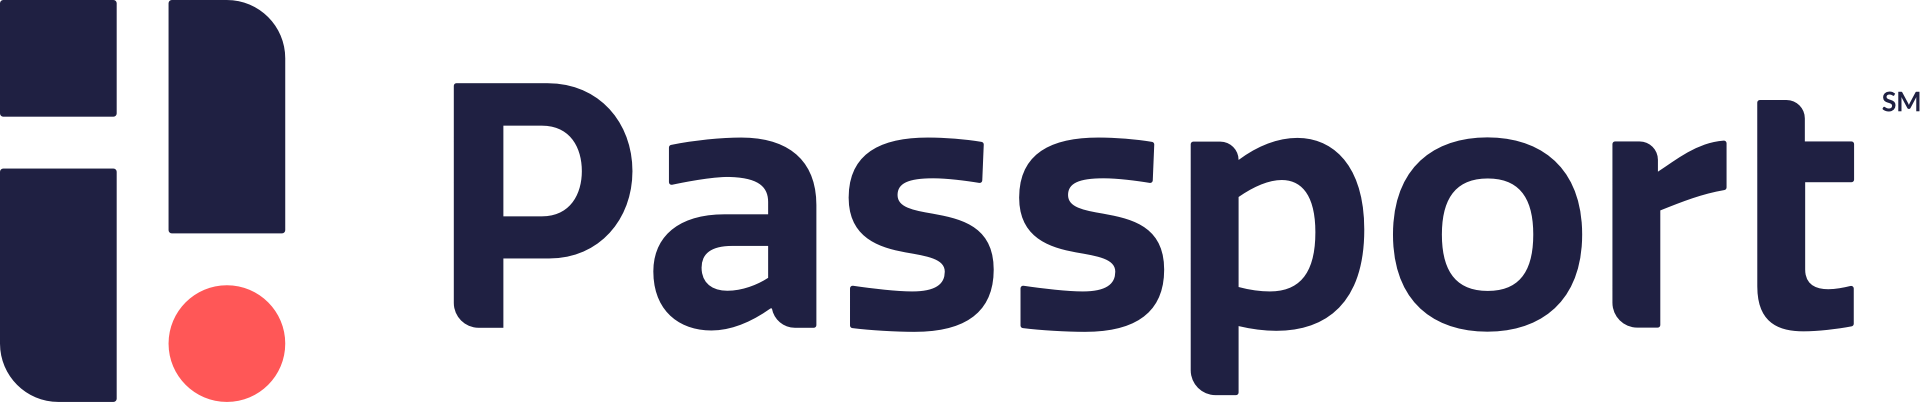 Passport Labs, Inc.  logo